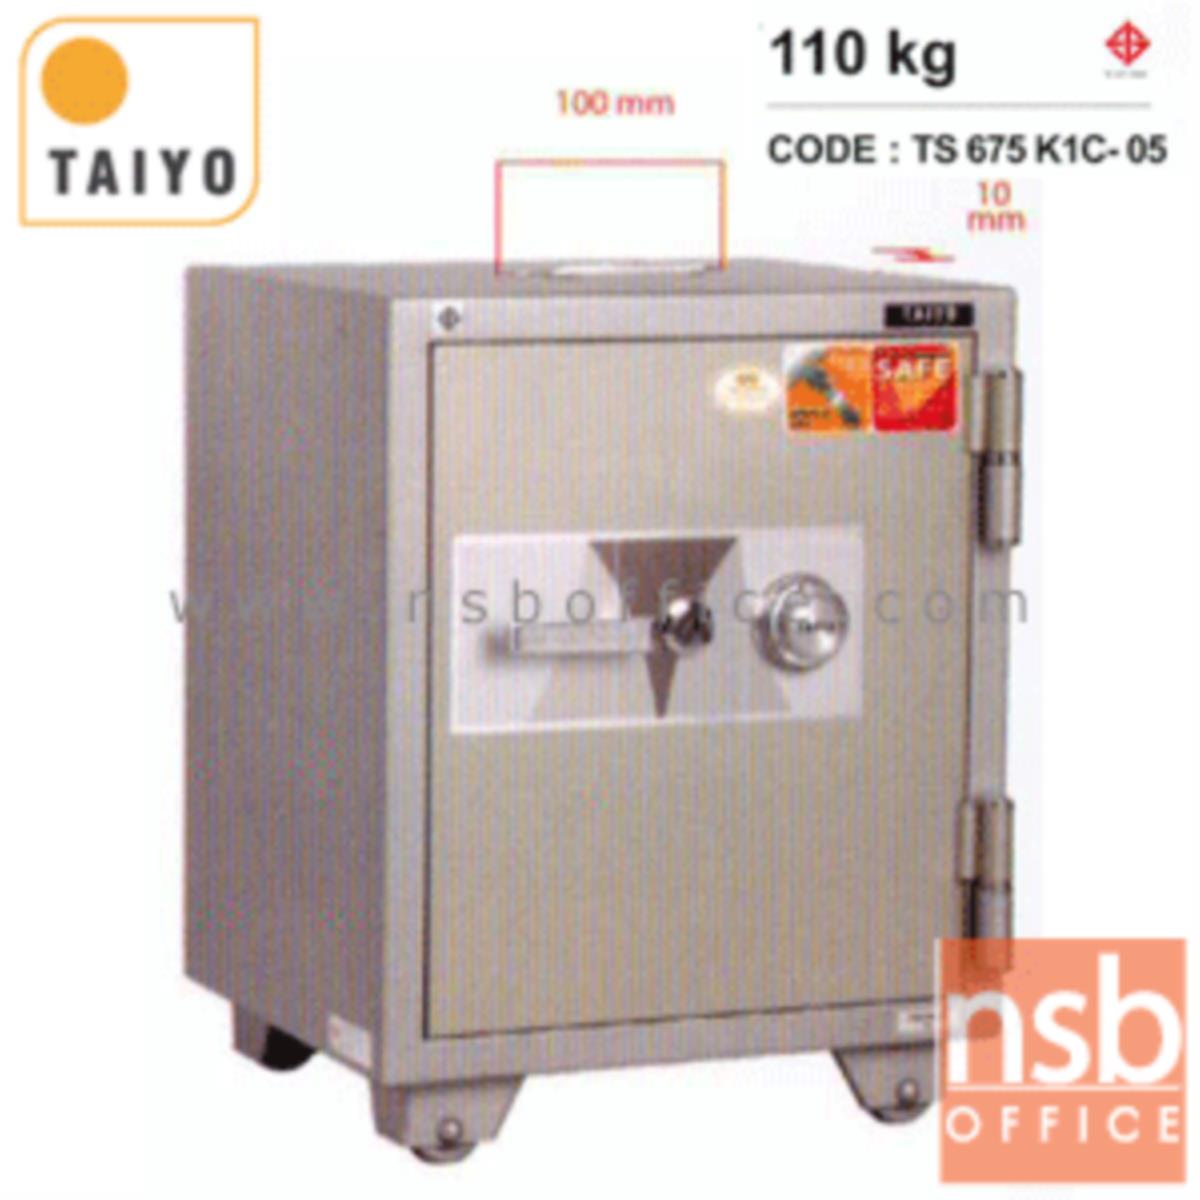 F01A051:ตู้เซฟบริจาค TAIYO TS675K1C-05 มอก. 110 กก. 1 กุญแจ 1 รหัส (เจาะช่องรับบริจาค 10 cm ด้านบน)   